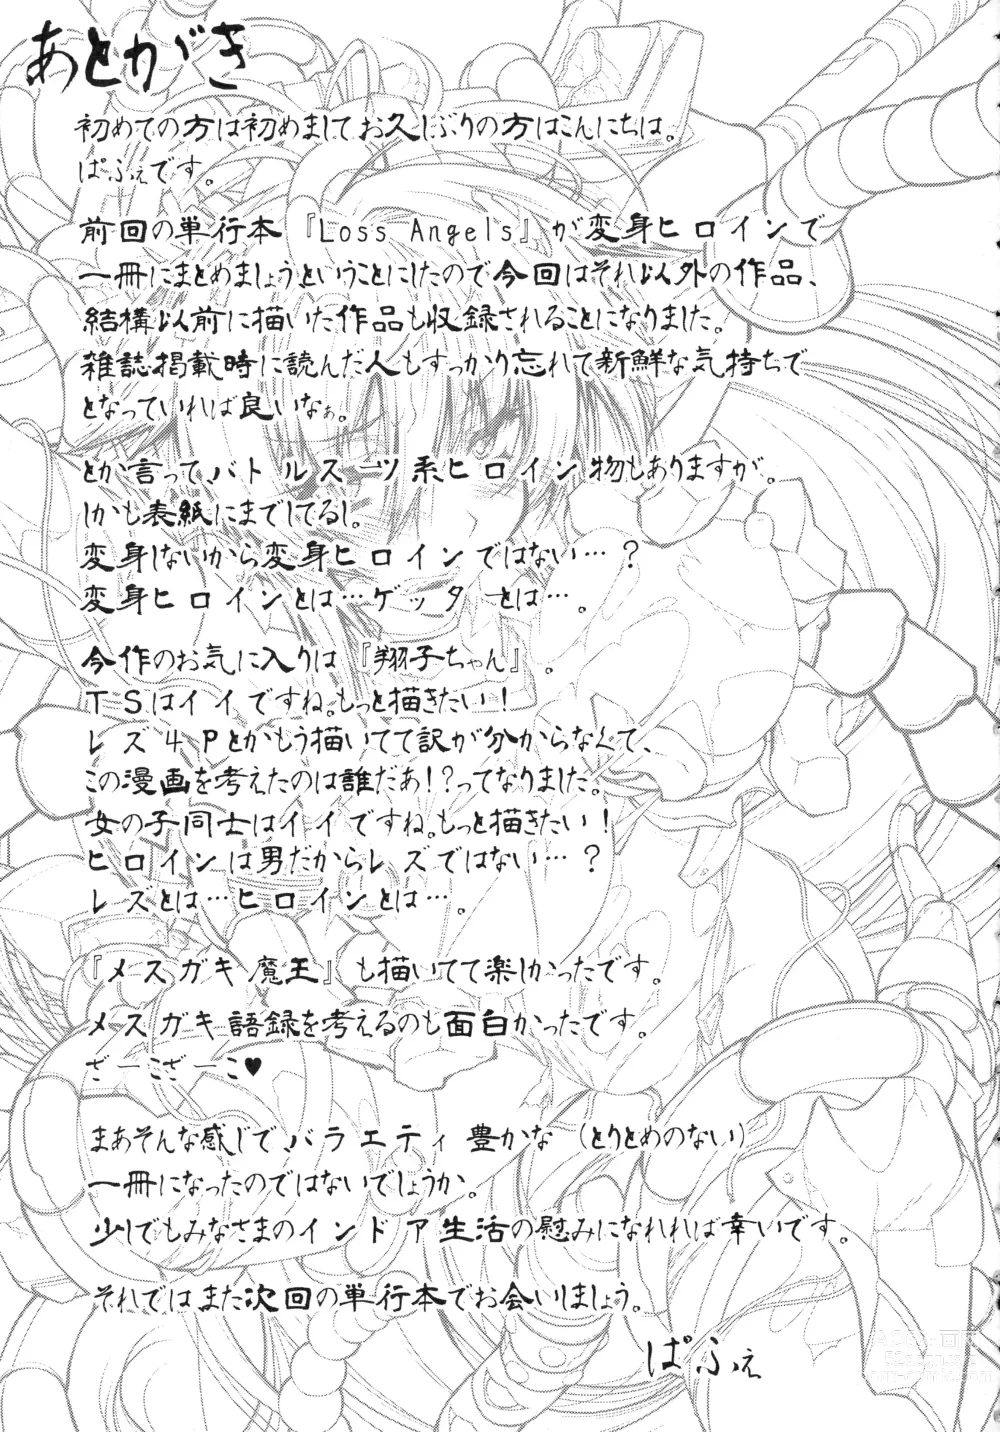 Page 175 of manga HEROINE CRISIS